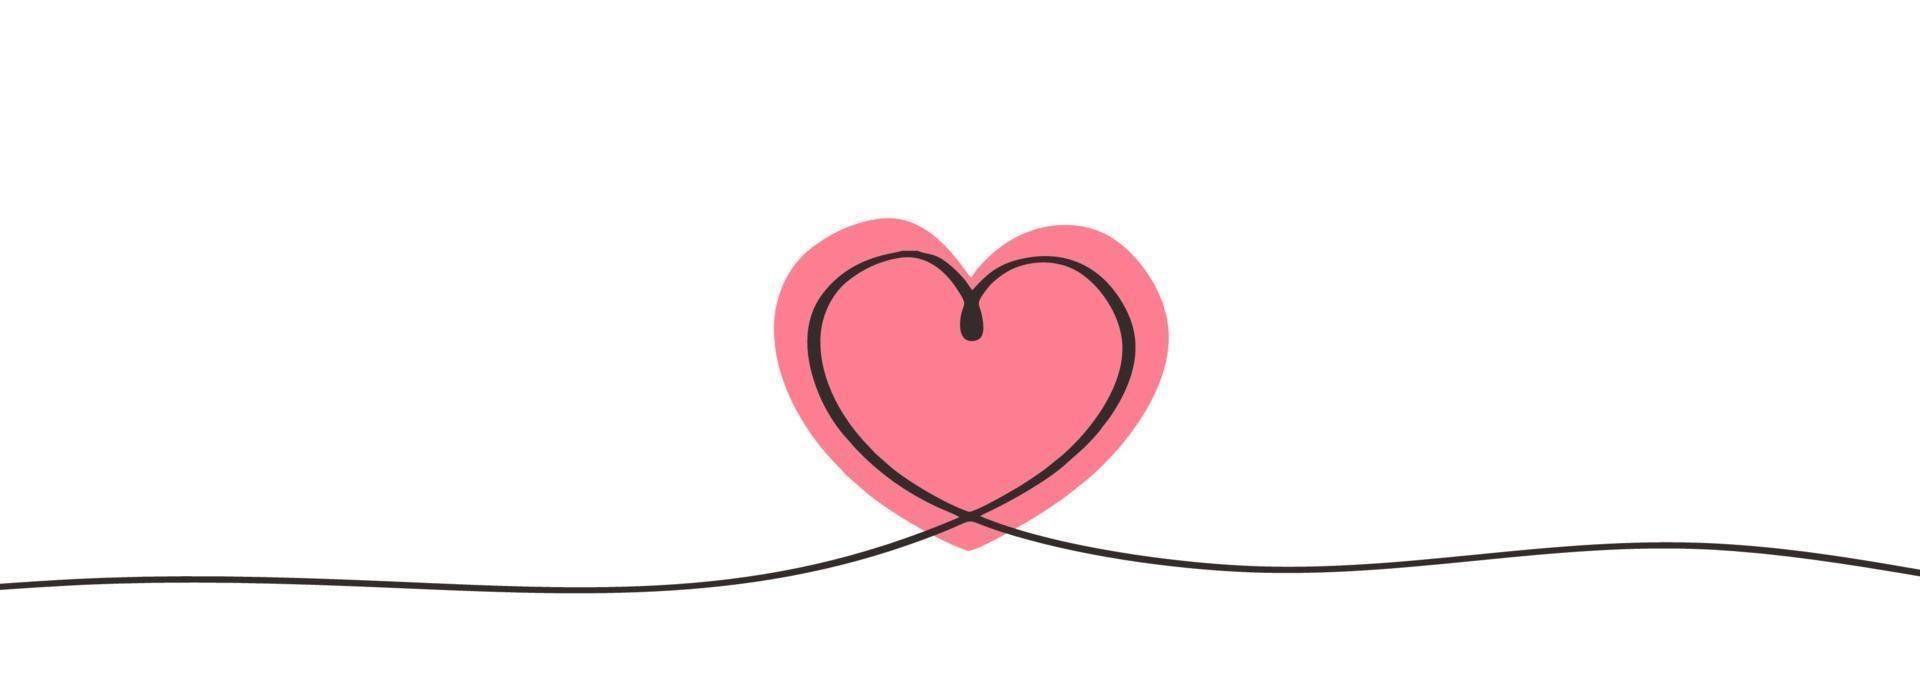 hart pictogram continu één lijntekening minimalisme concept van liefde. vector